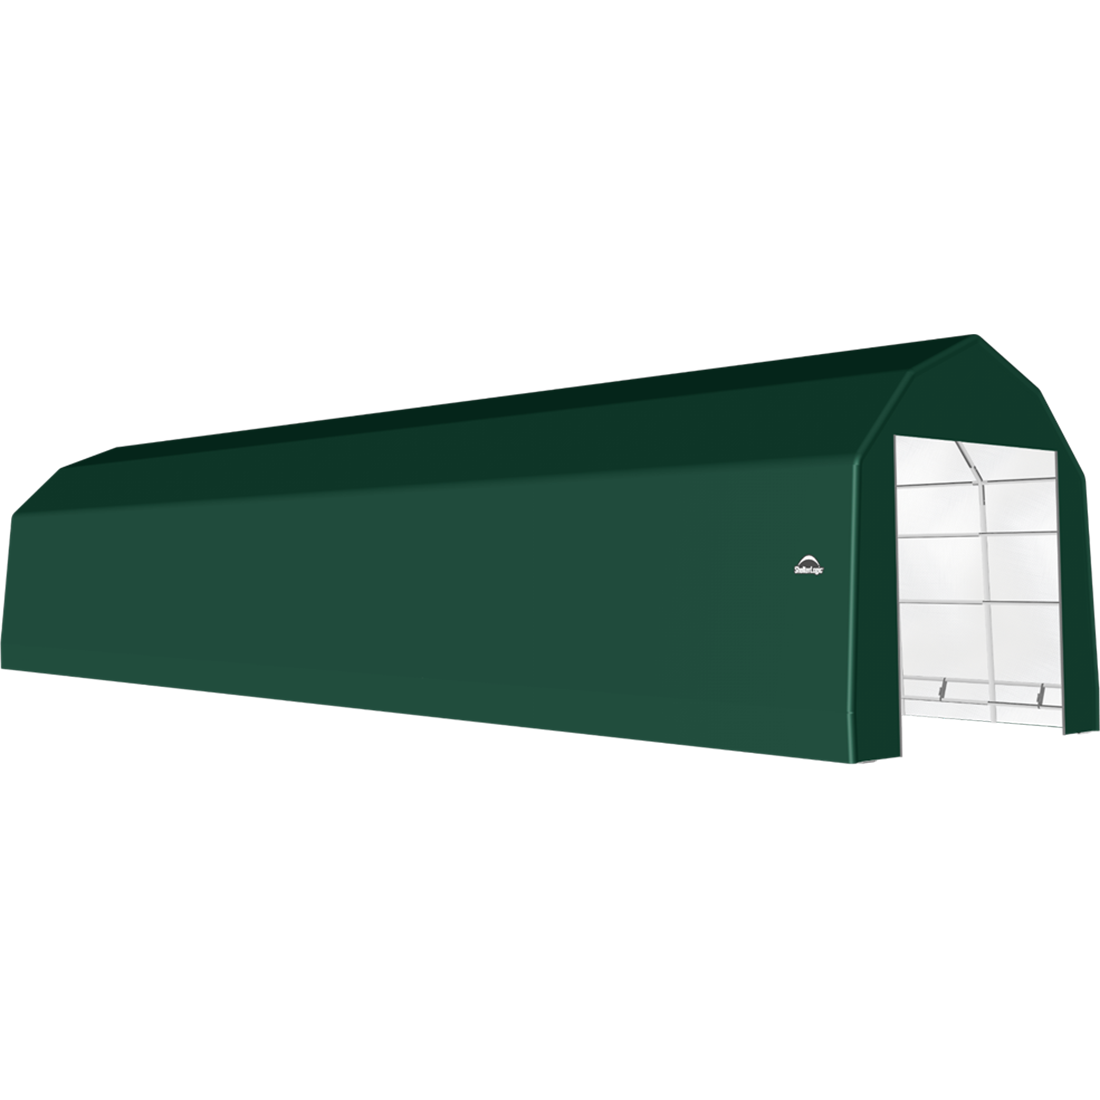 ShelterTech SP Series Barn Shelter, 15 ft. x 60 ft. x 14 ft. Heavy Duty PVC 14.5 oz. Green